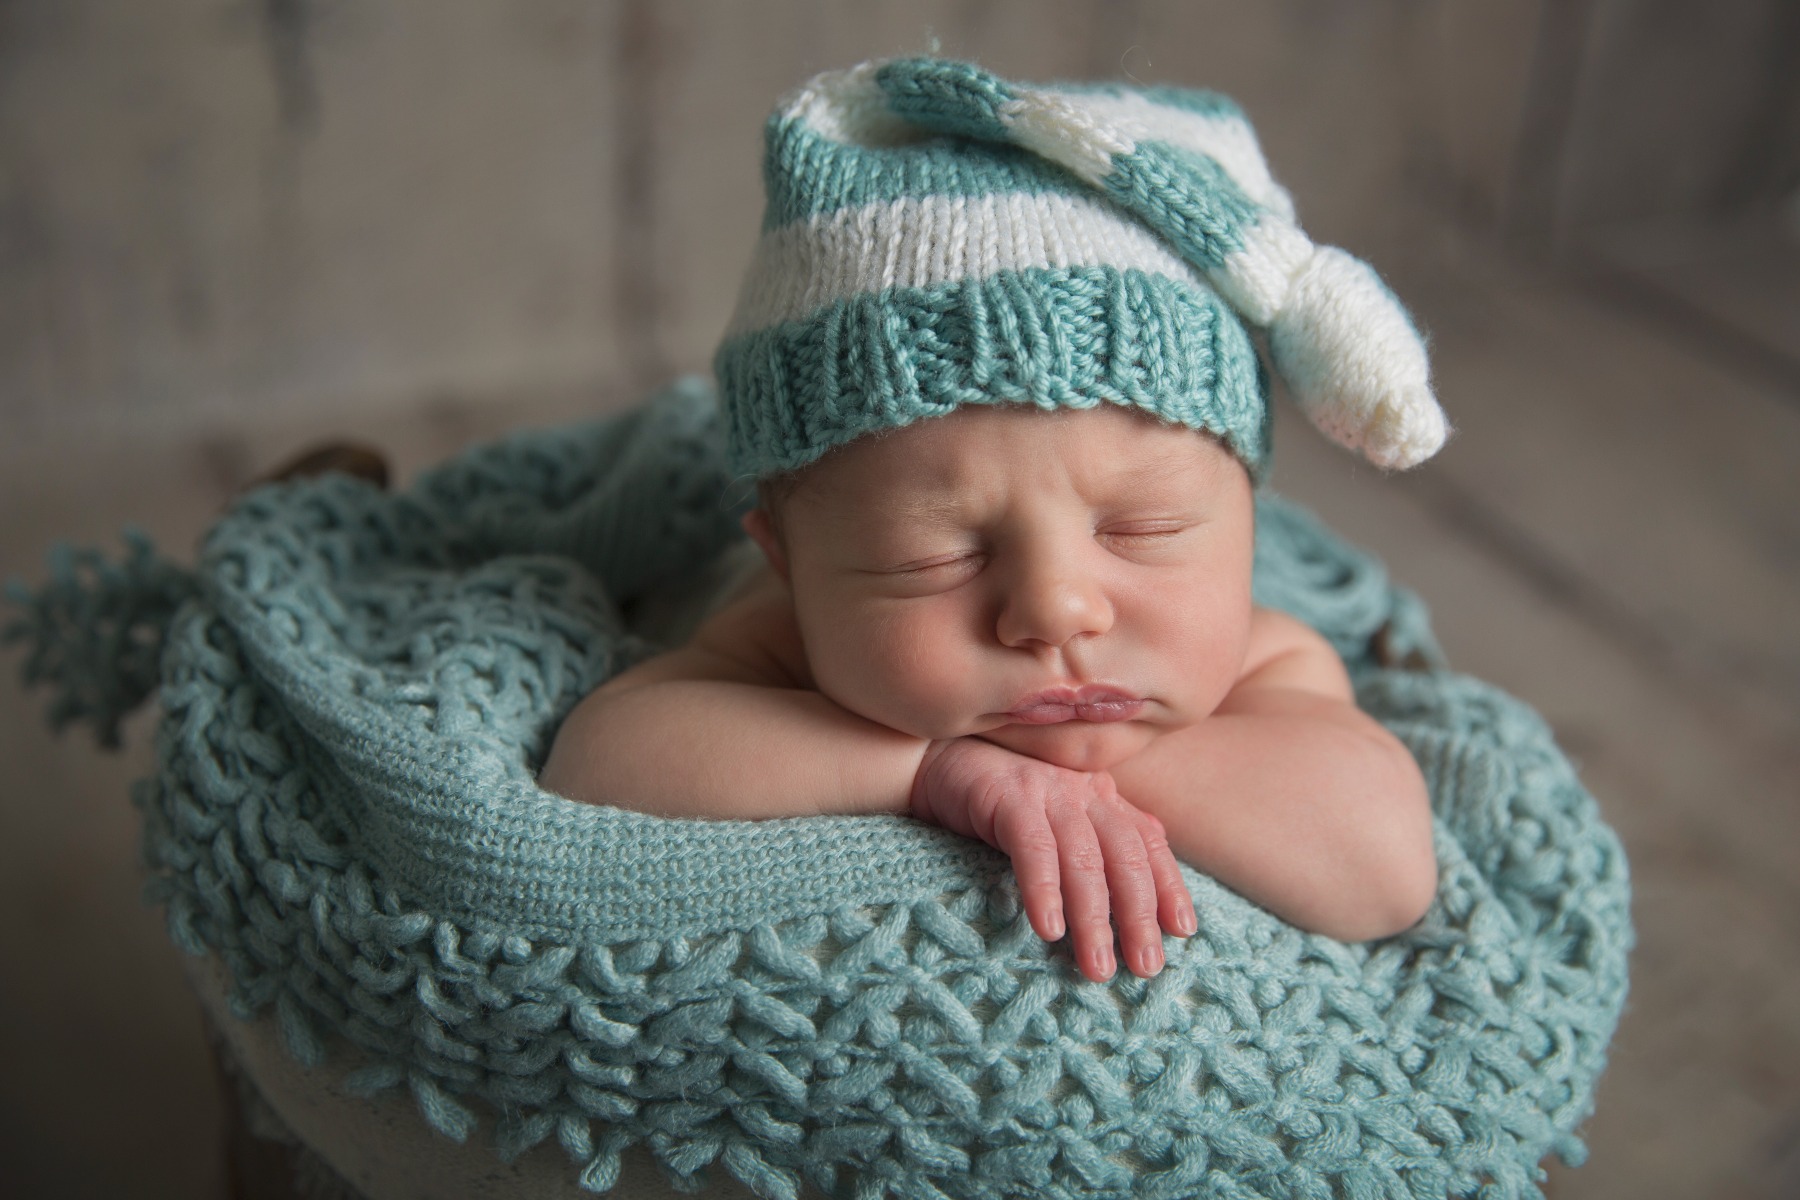 newborn baby in a teal & white sleep cap